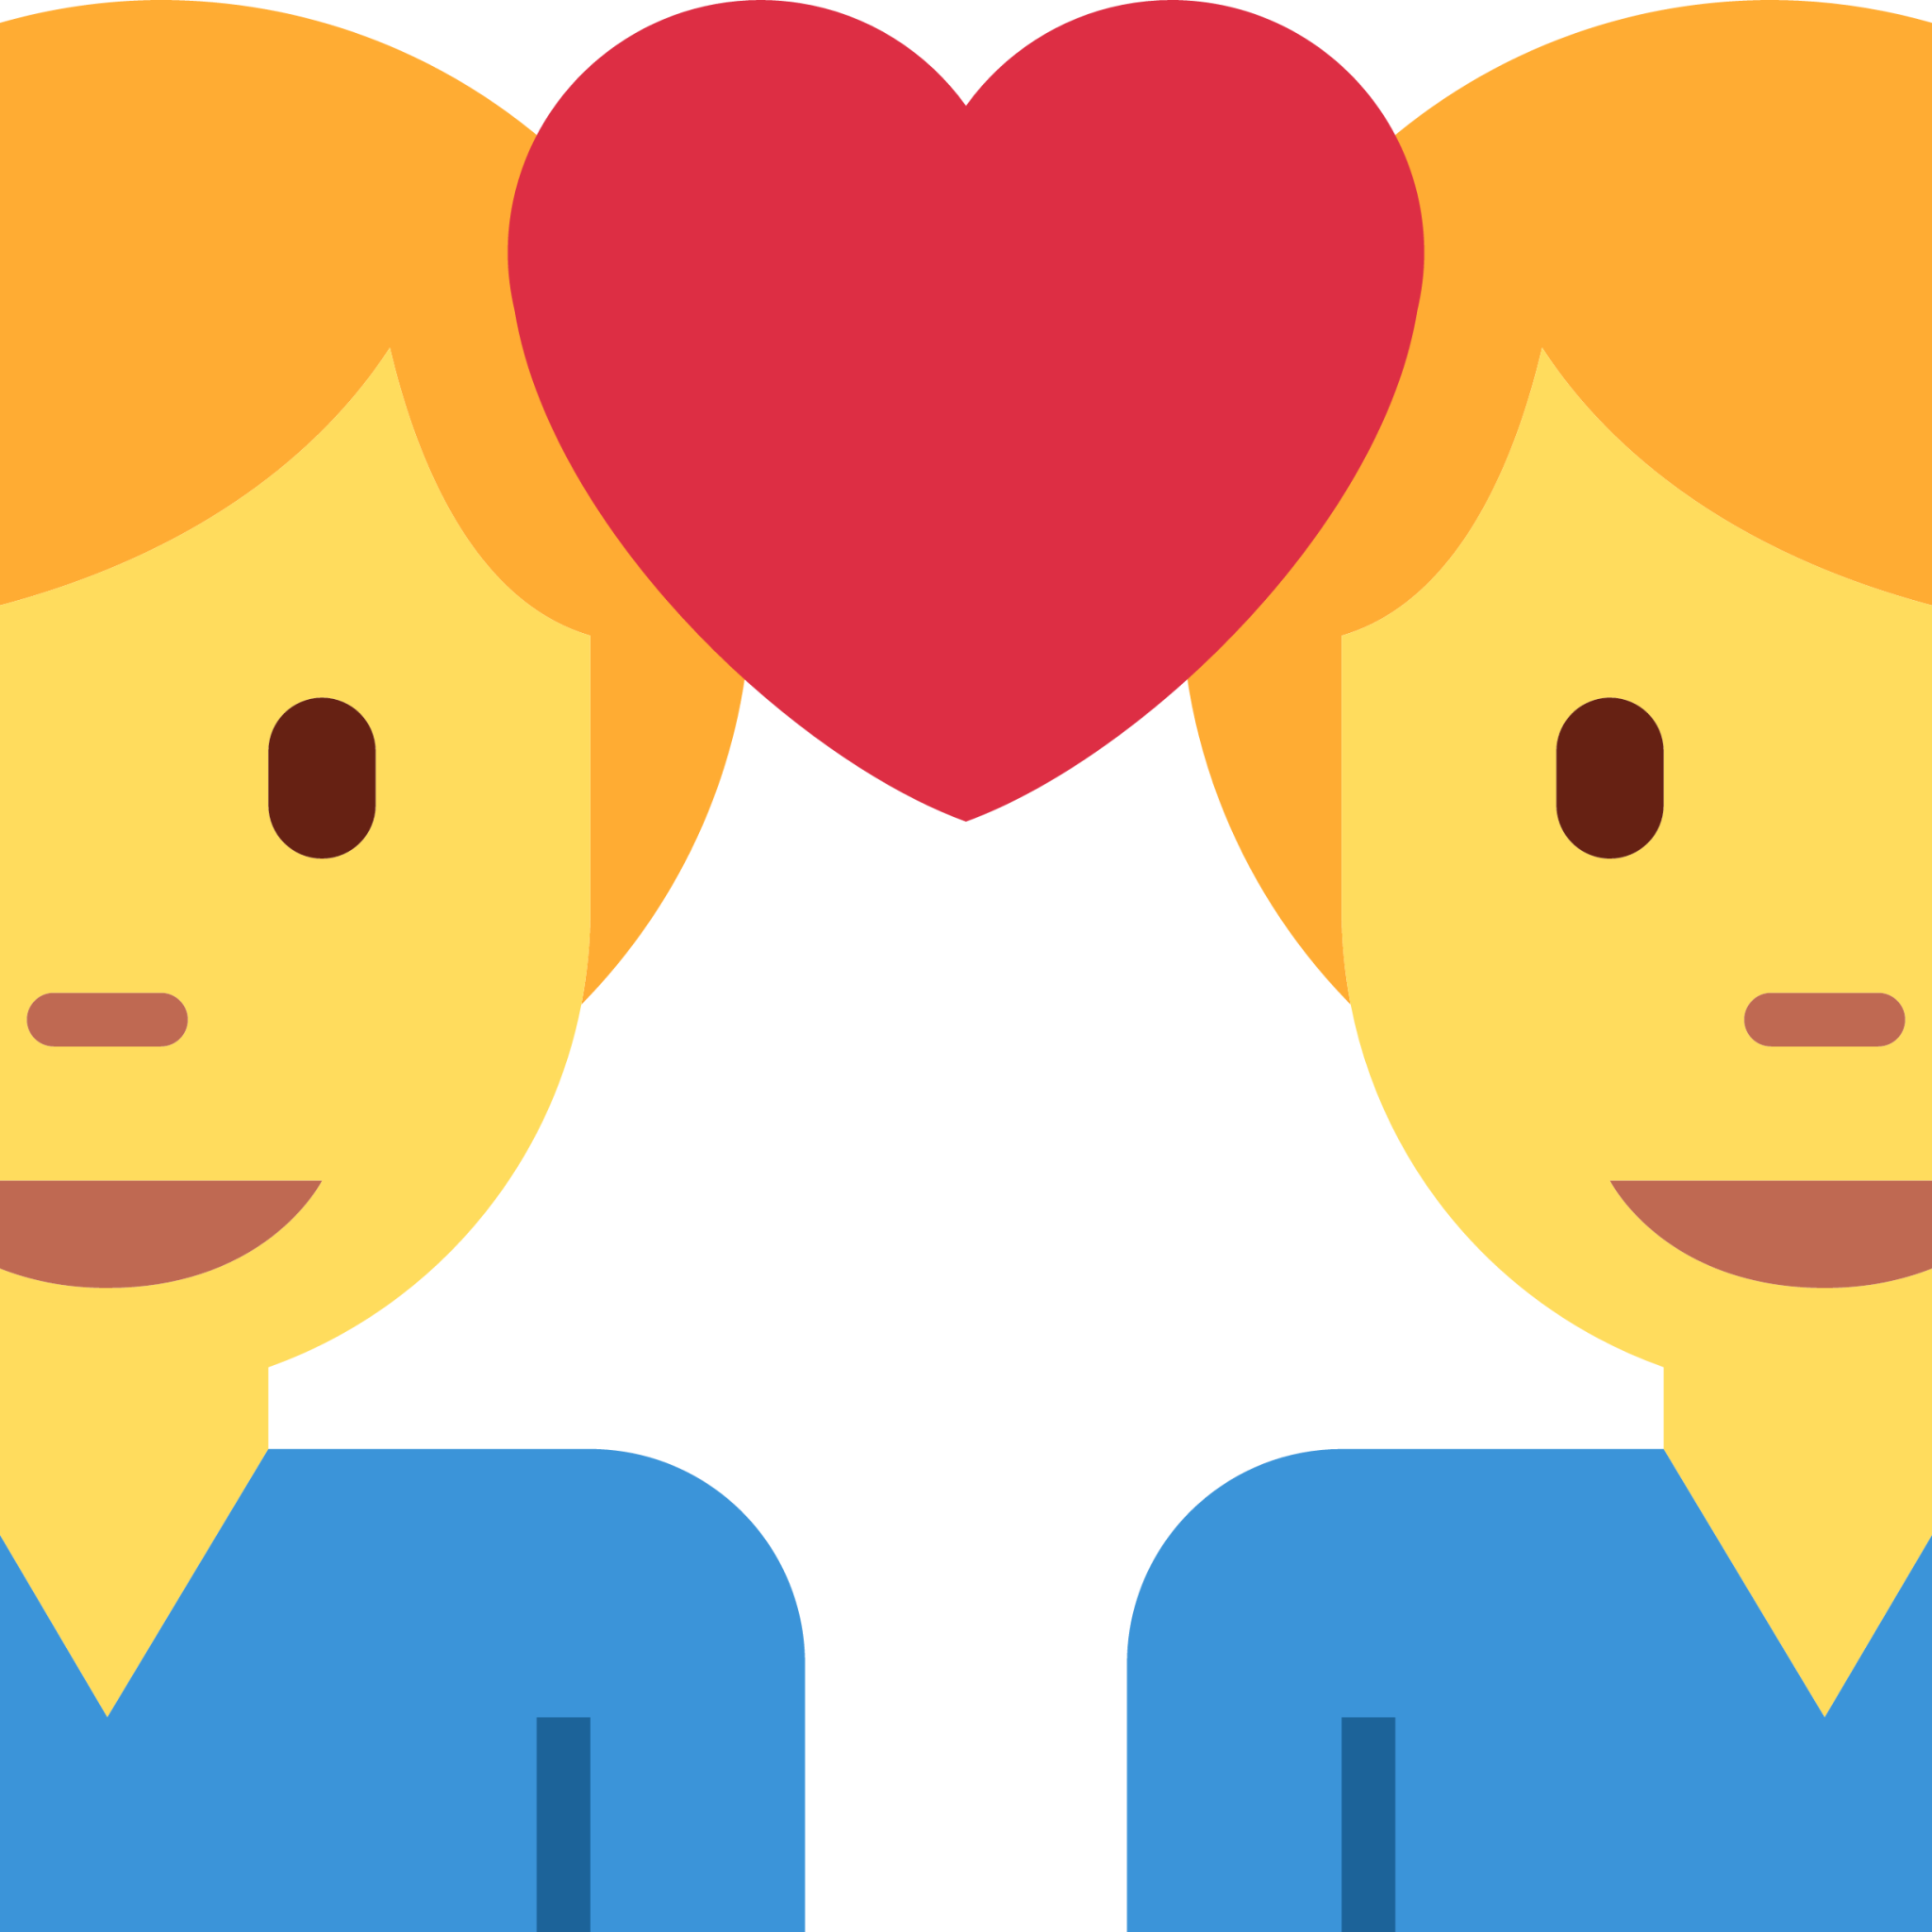 couple with heart: man, man emoji